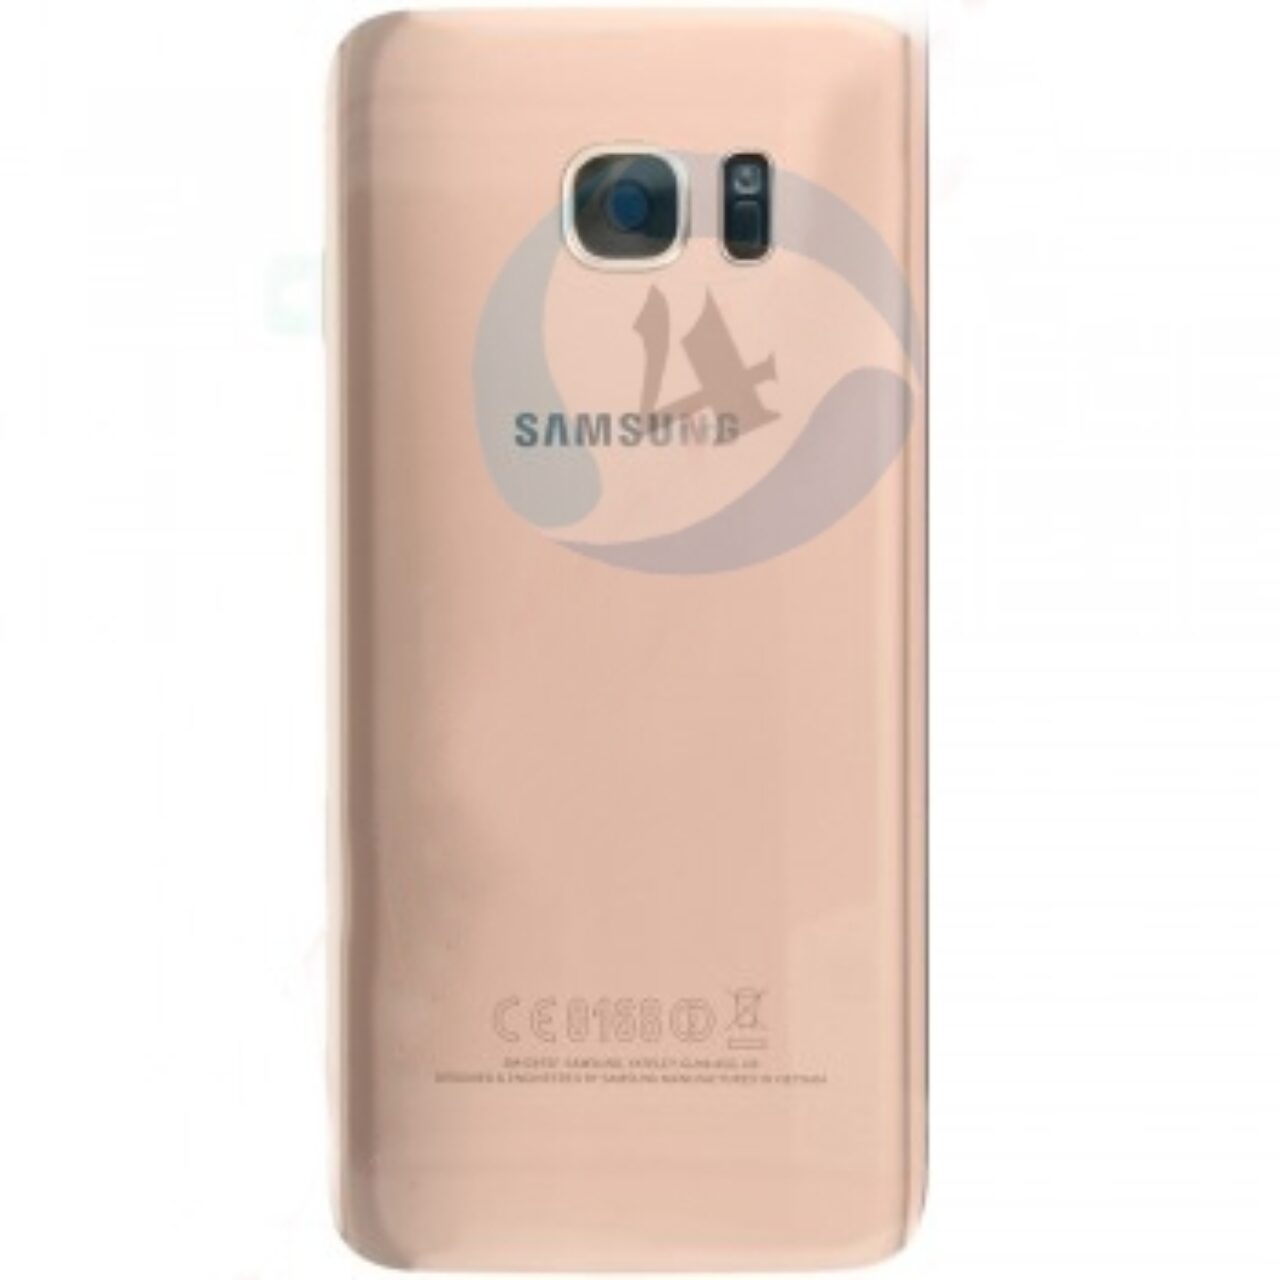 Samsung g935f galaxy s7 edge backcover gh82 11346e pink